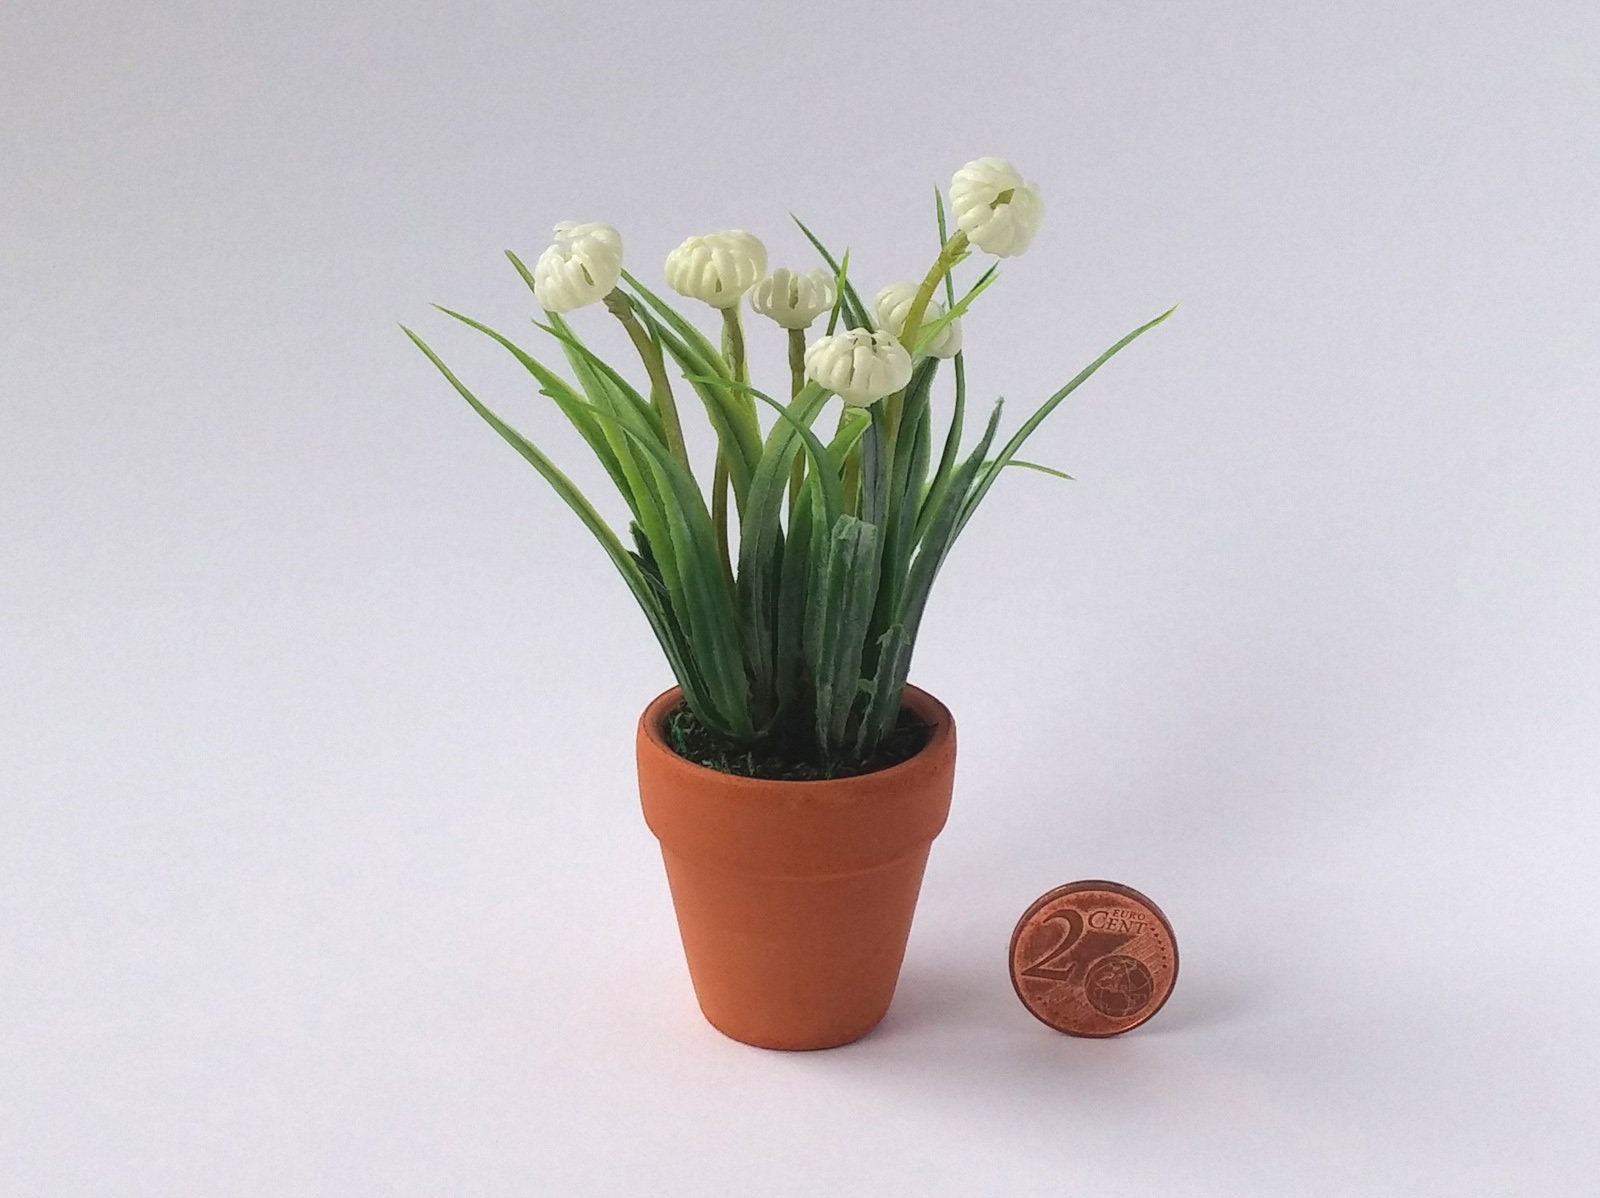 Miniature Plant with 3 WHITE Flower Oriental Dollhouse Garden Model Landscape F7 